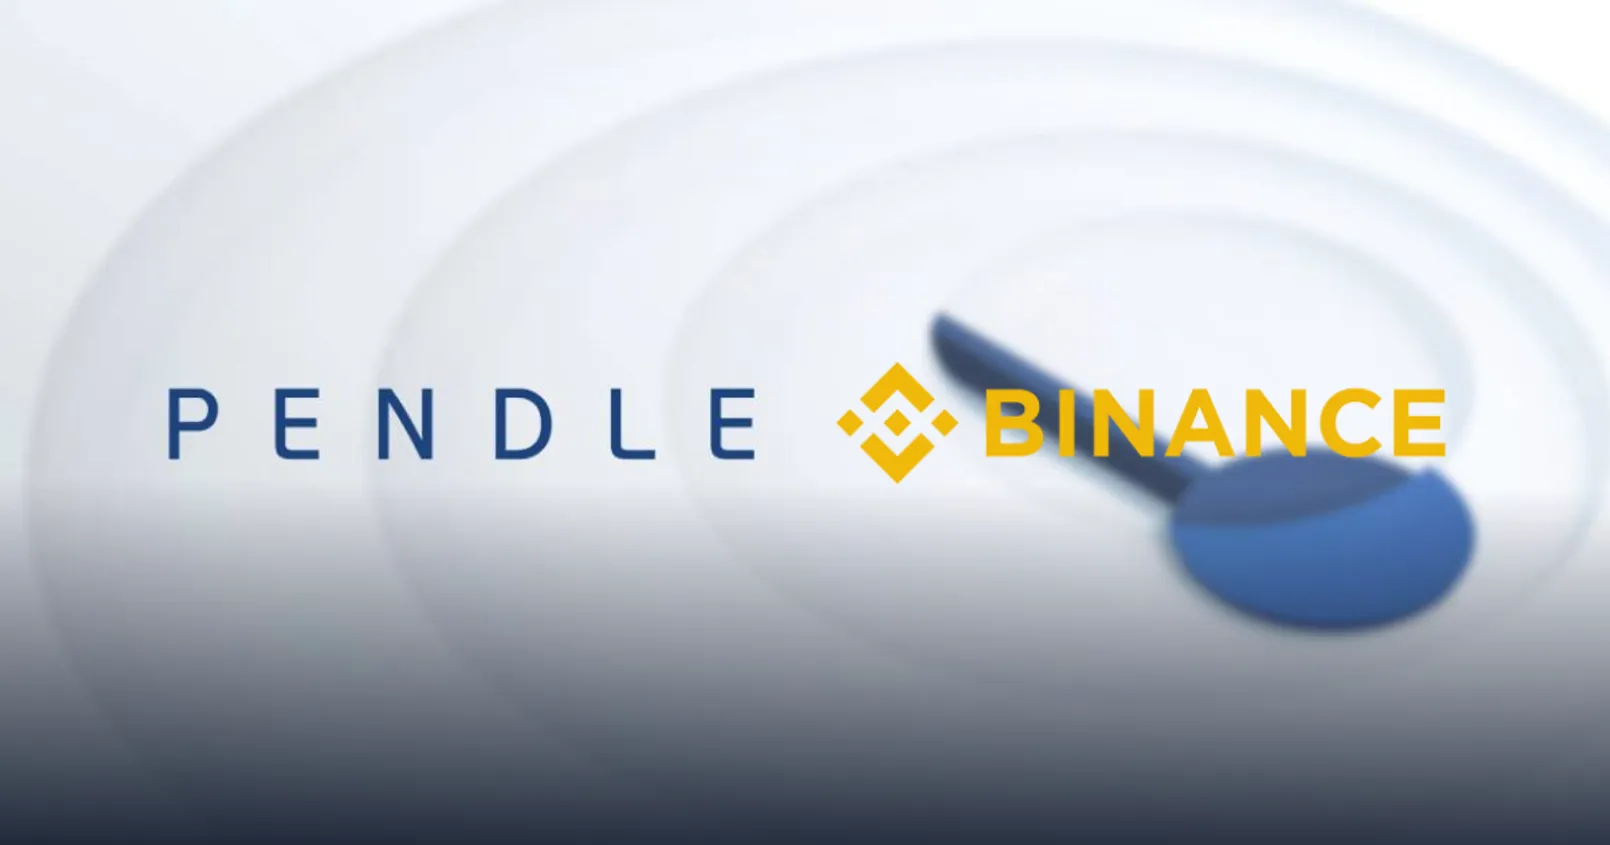 Binance ประกาศลิสต์เหรียญ altcoin มาแรงอย่าง PENDAL เข้าสู่พื้นที่ 'Innovation Zone'